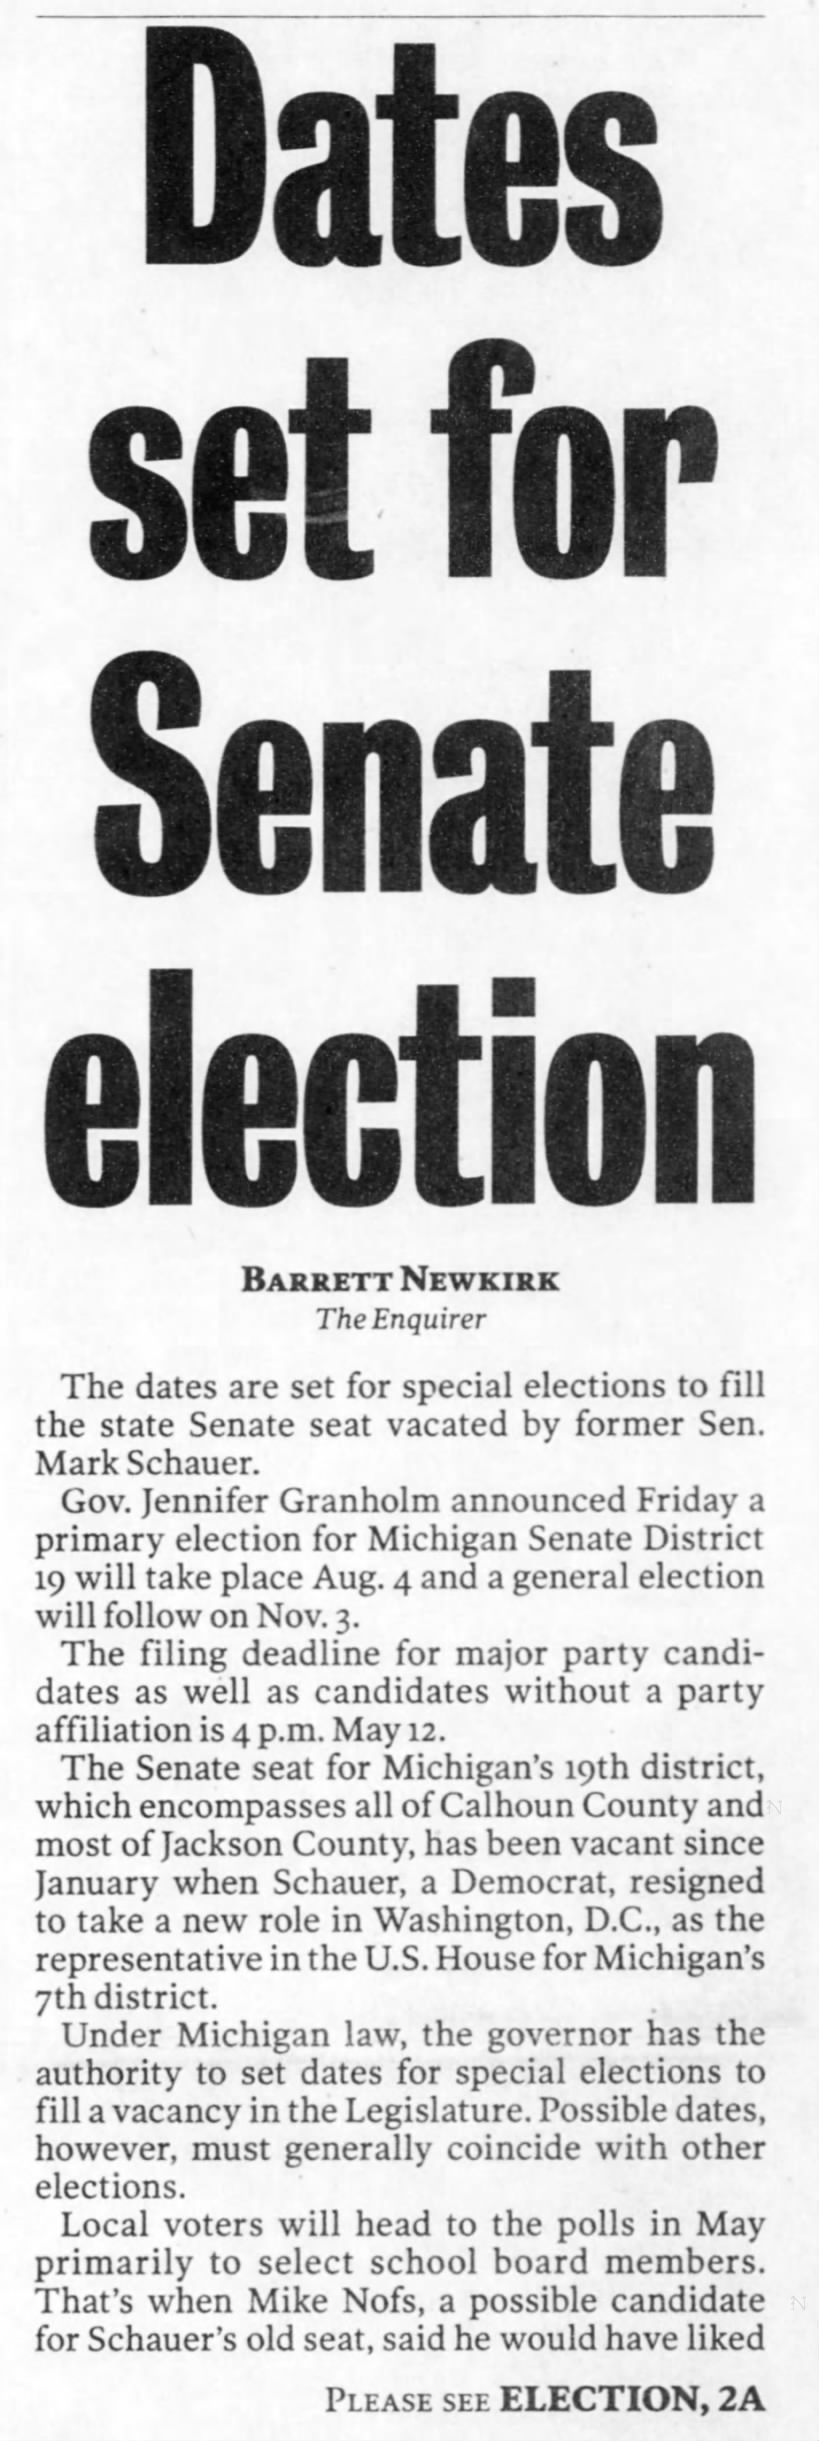 Dates set for Senate election